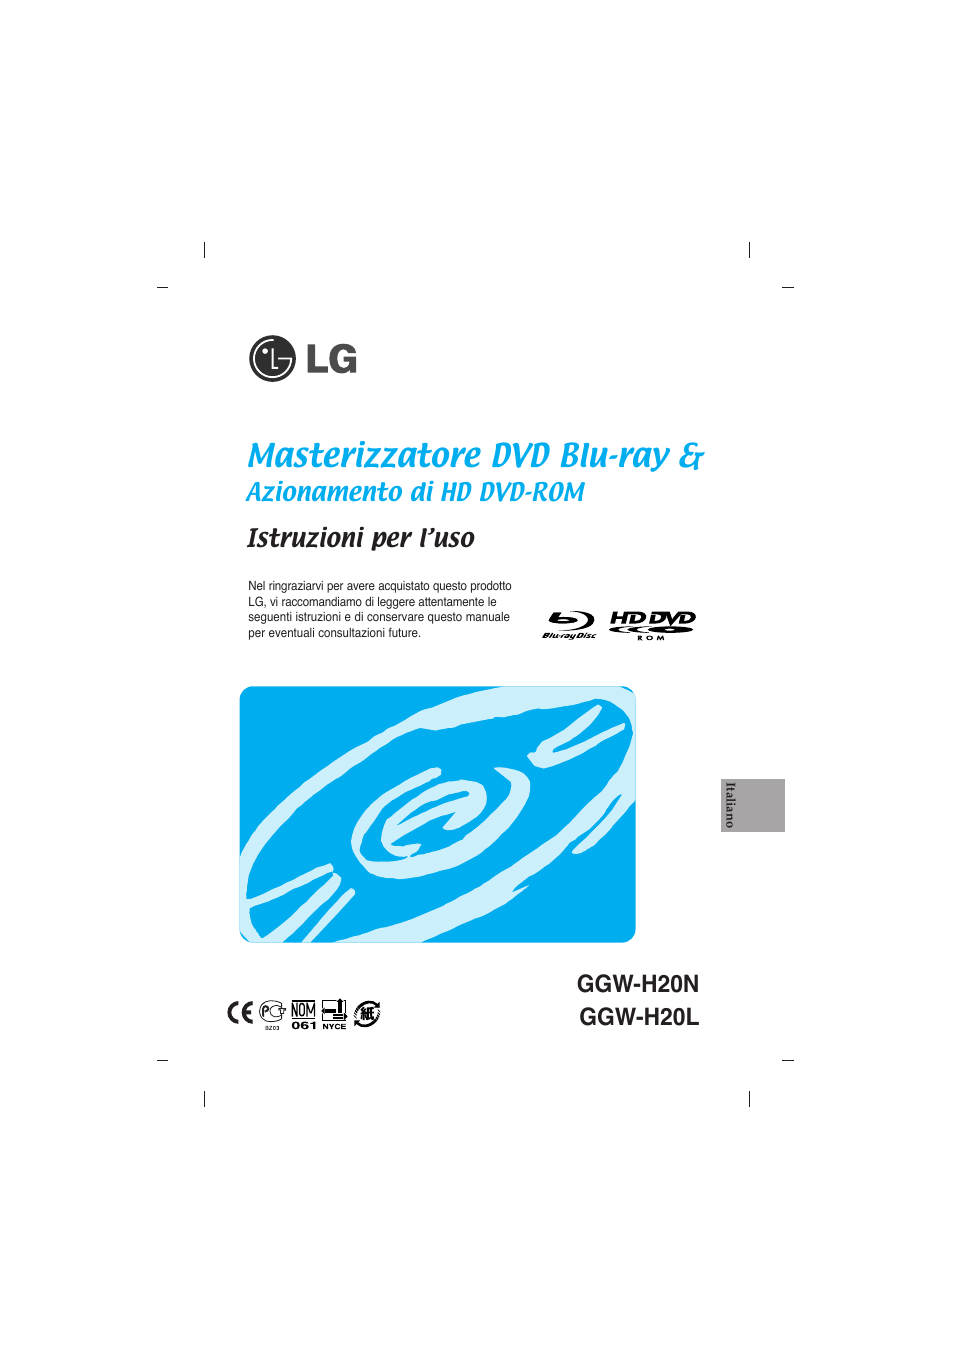 LG GGWH20L Manuale d'uso | Pagine: 12